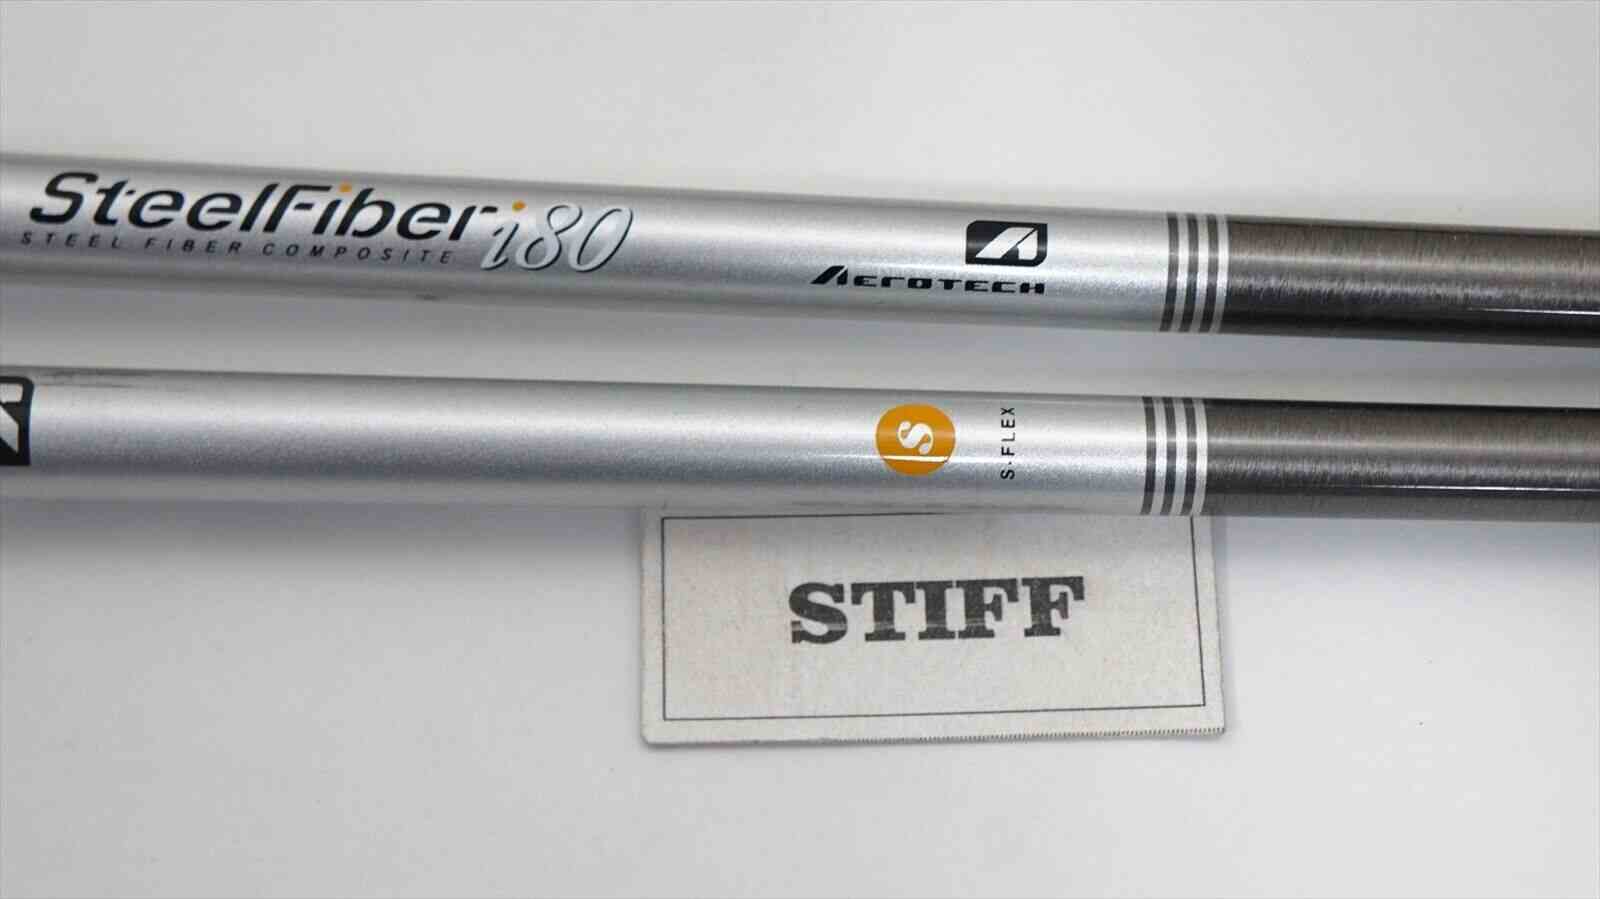 Aerotech Steelfiber i80 Reviews